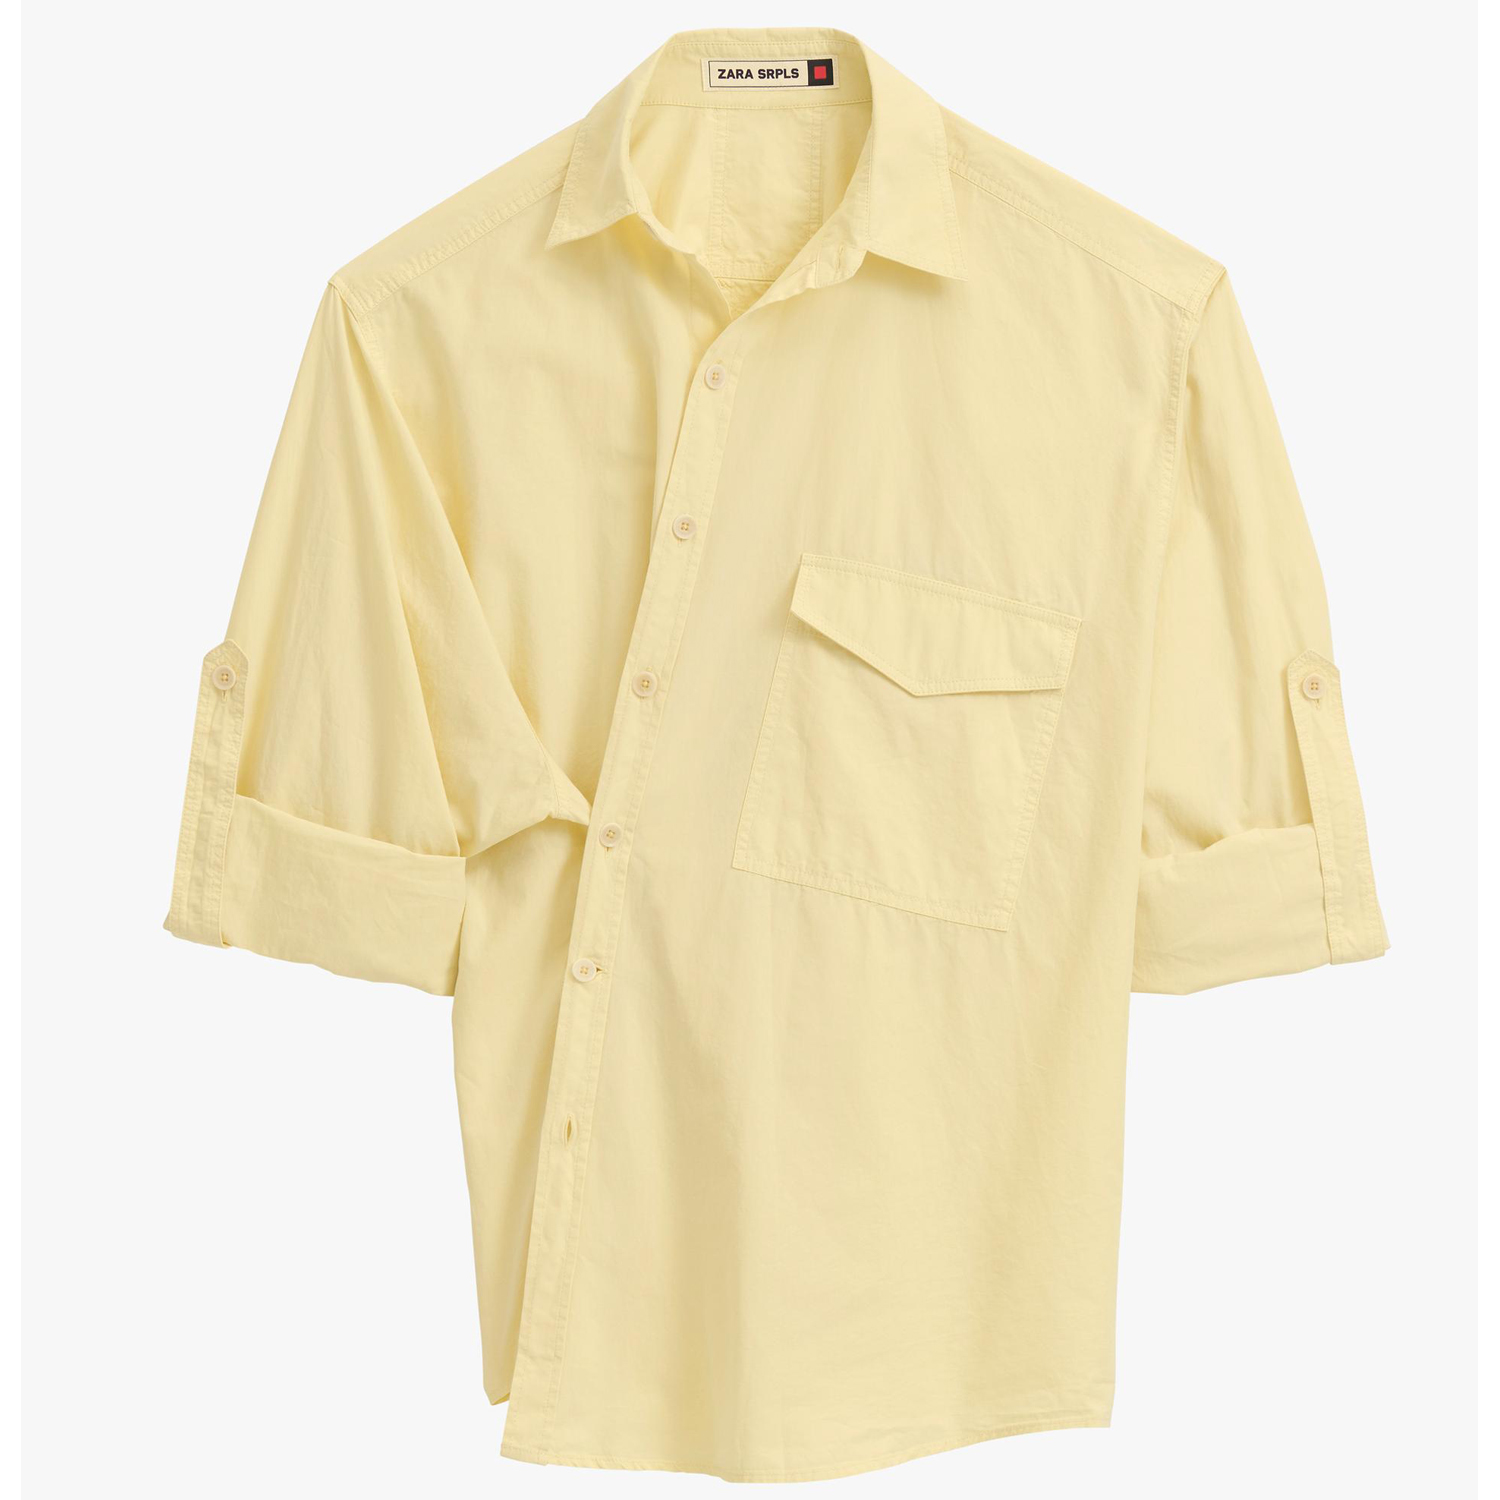 Рубашка Zara SMMTRC 12, желтый